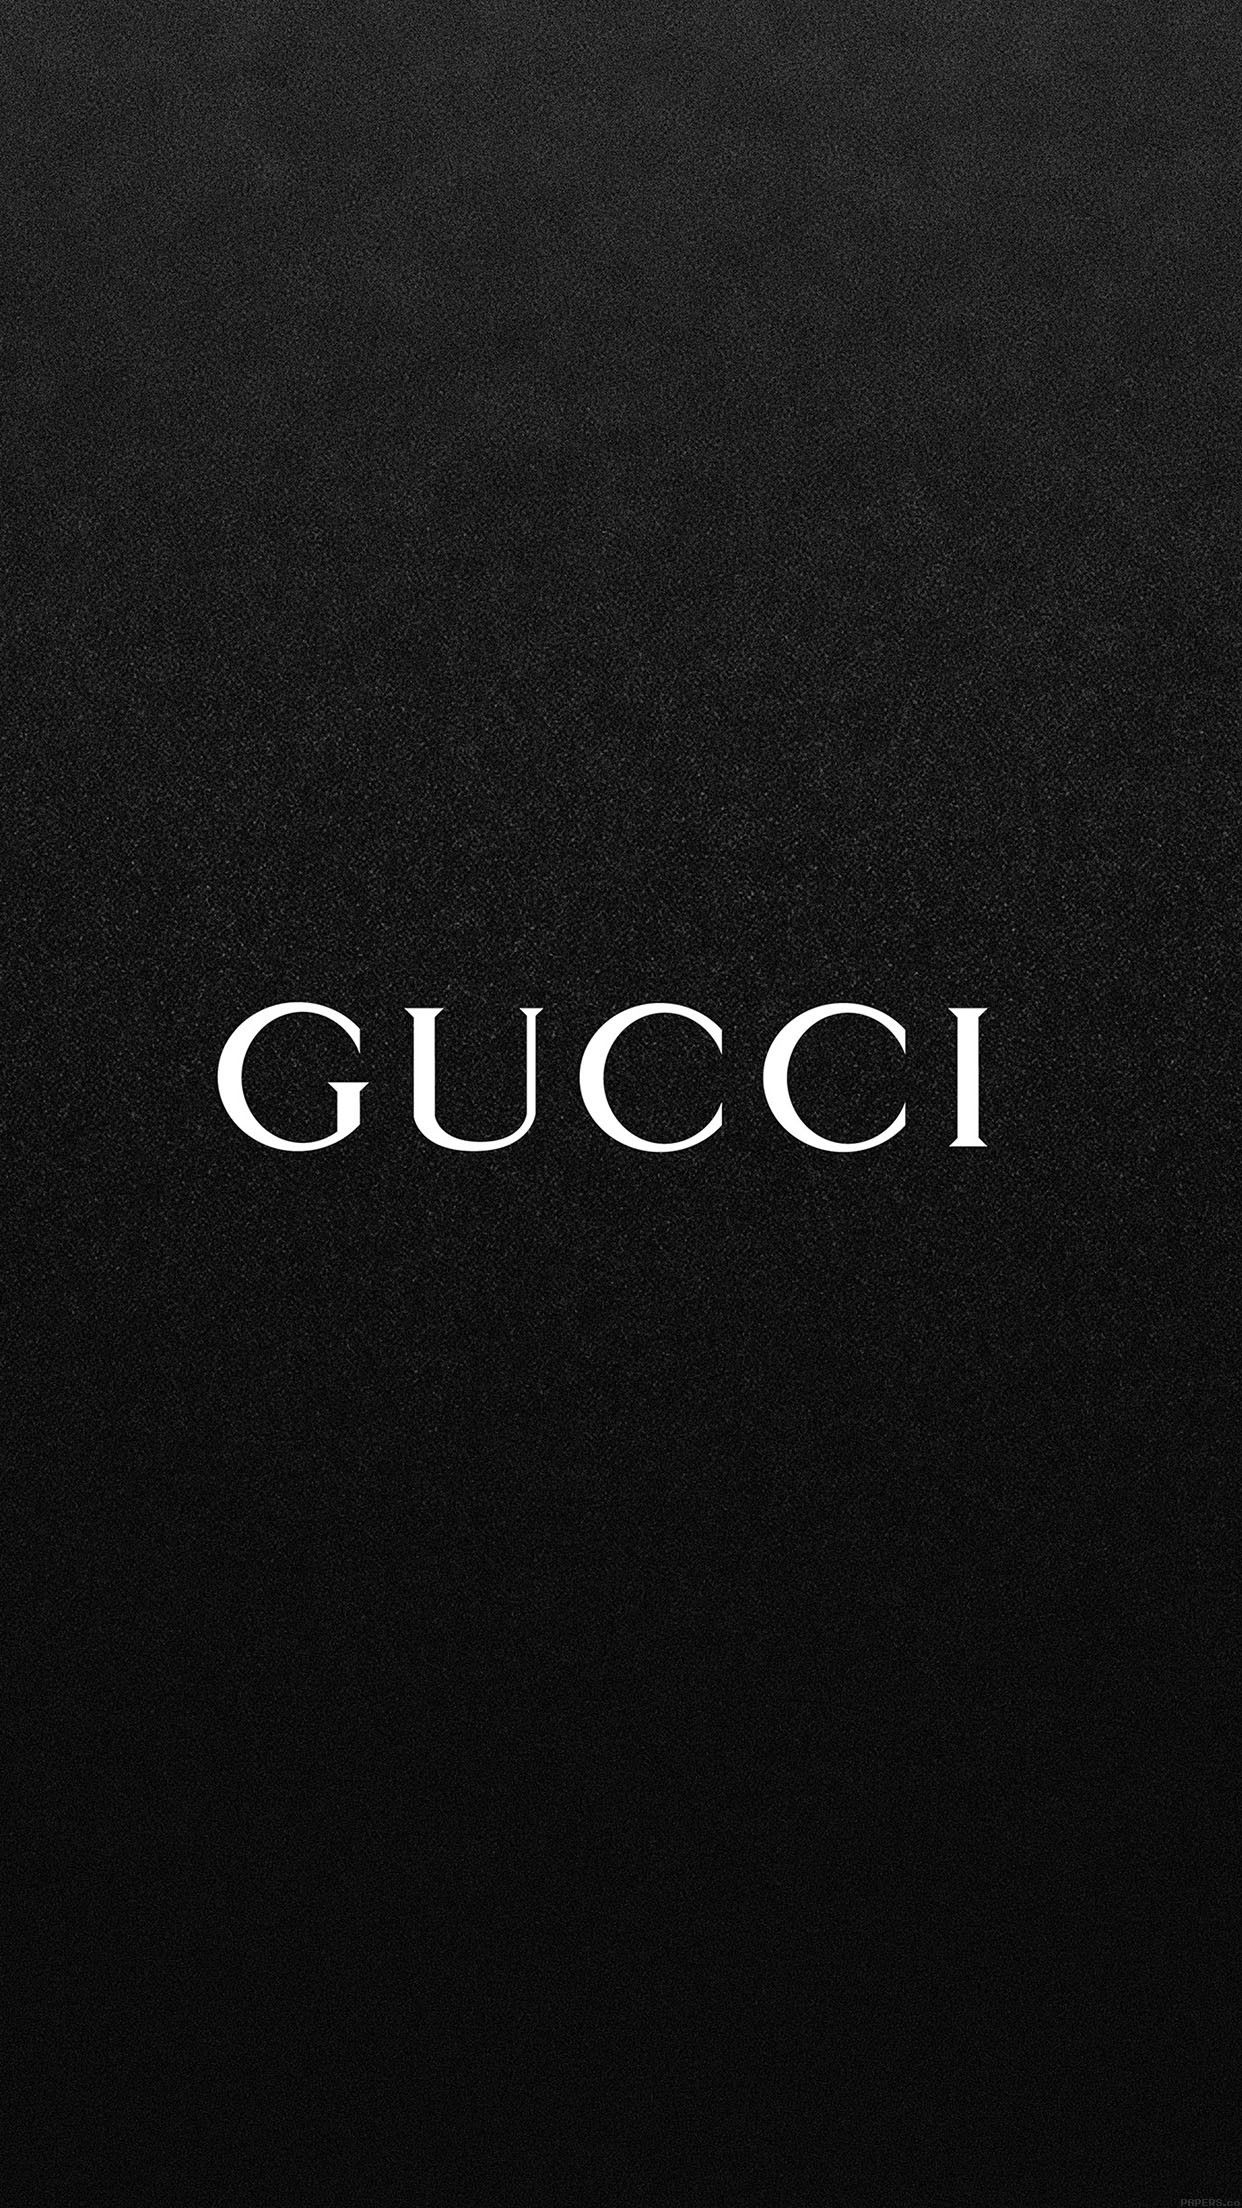 Gucci HD Wallpaper iPhone X